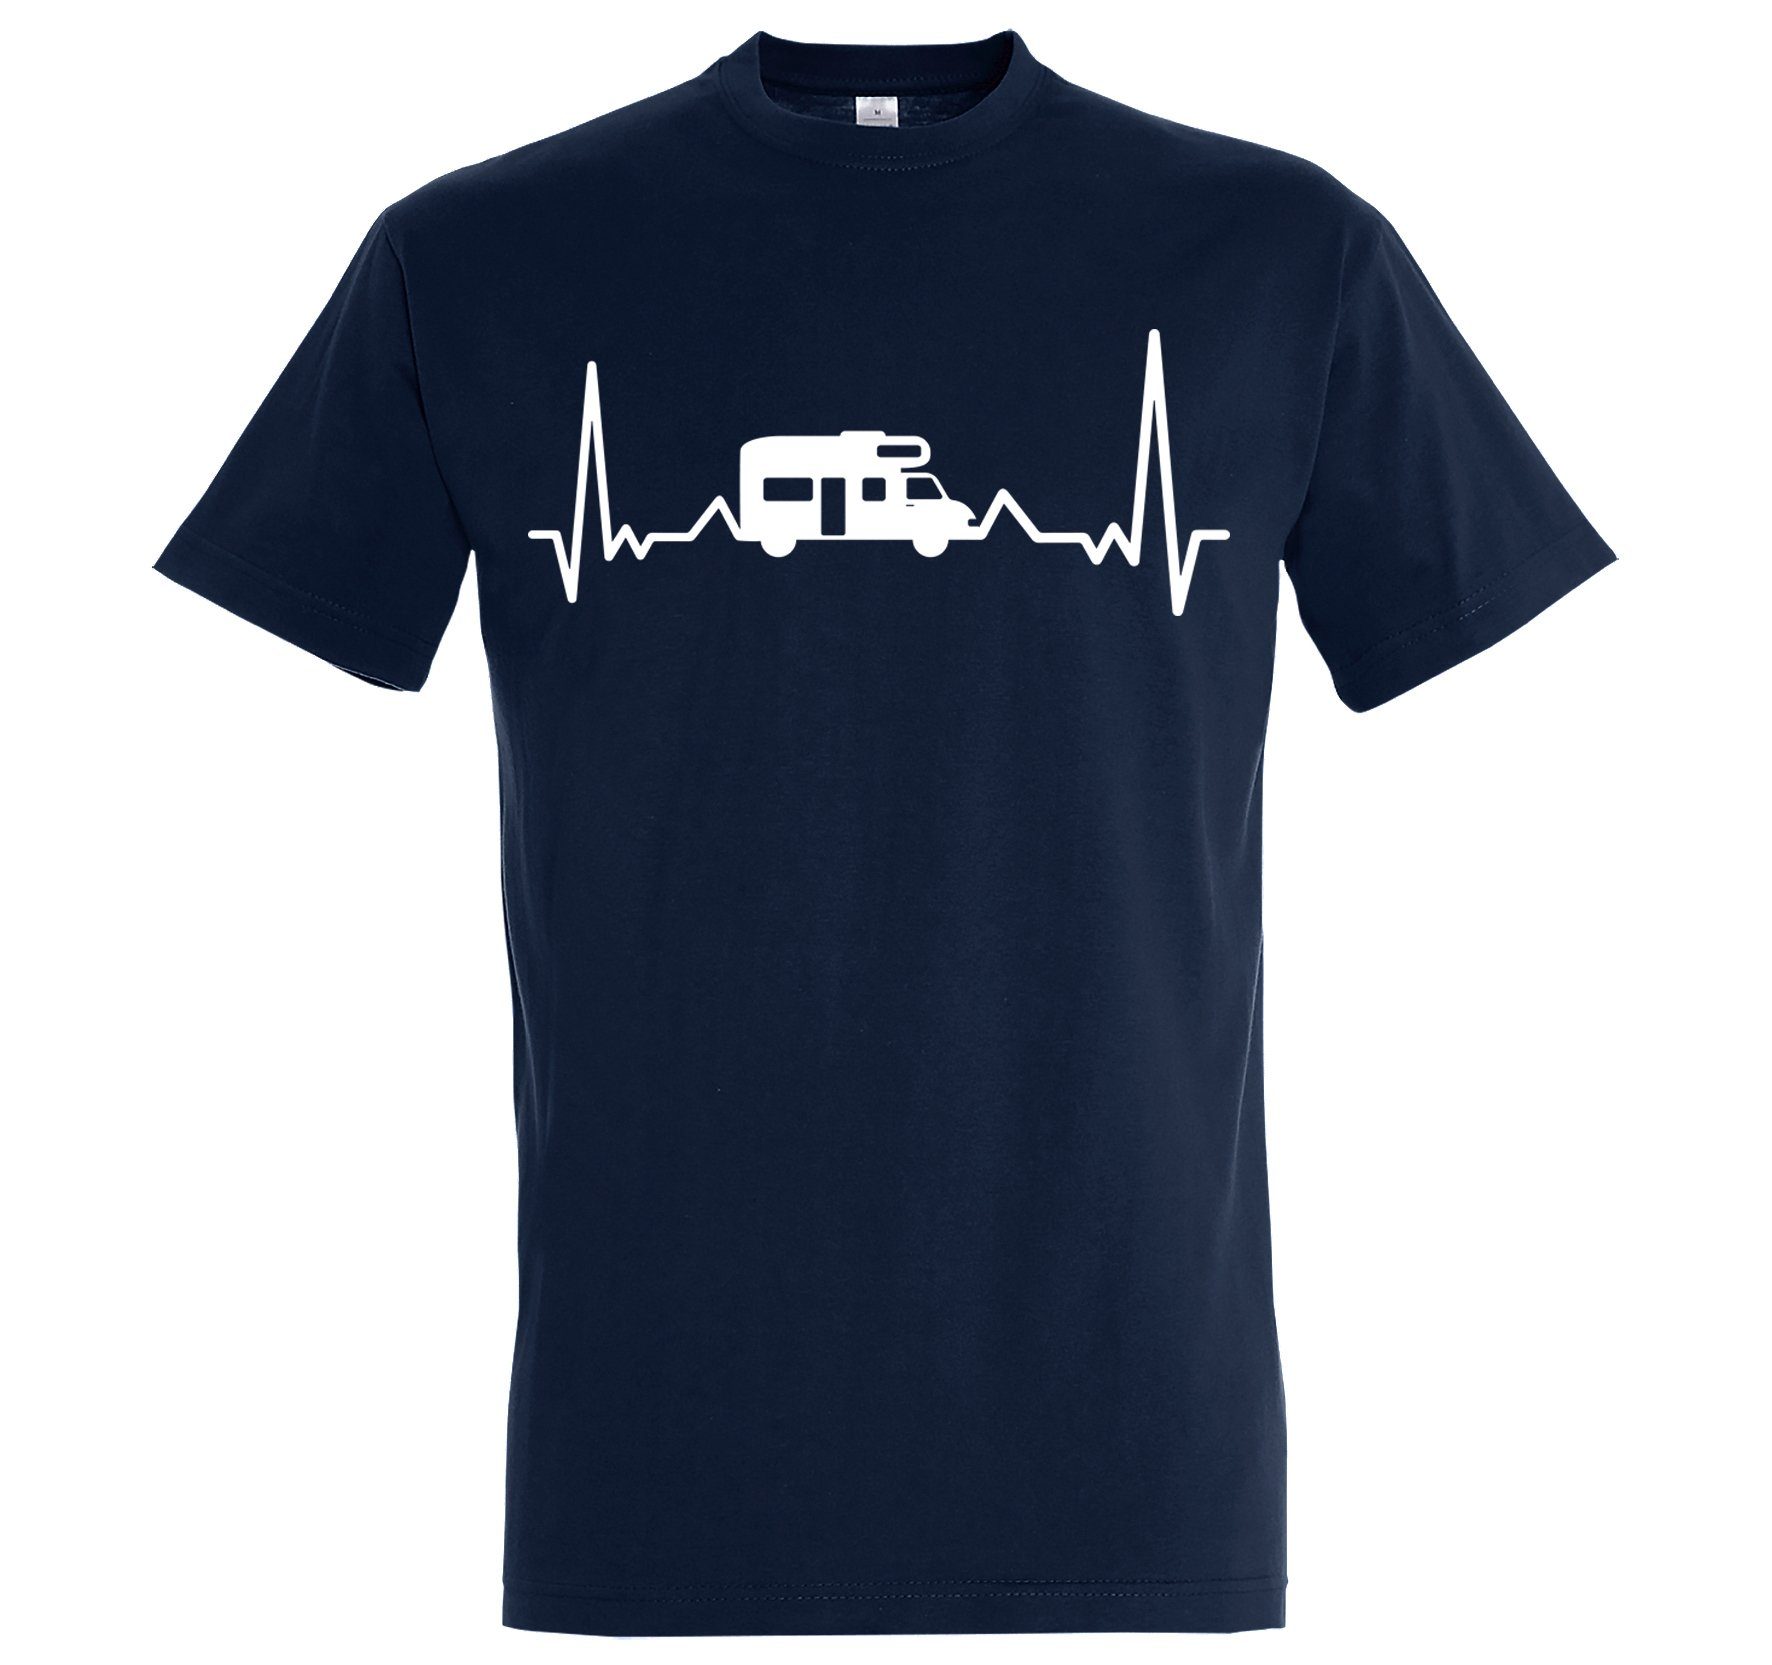 Youth T-Shirt Herren Navyblau Camping Frondruck Shirt Herzschlag Designz lutsigem mit